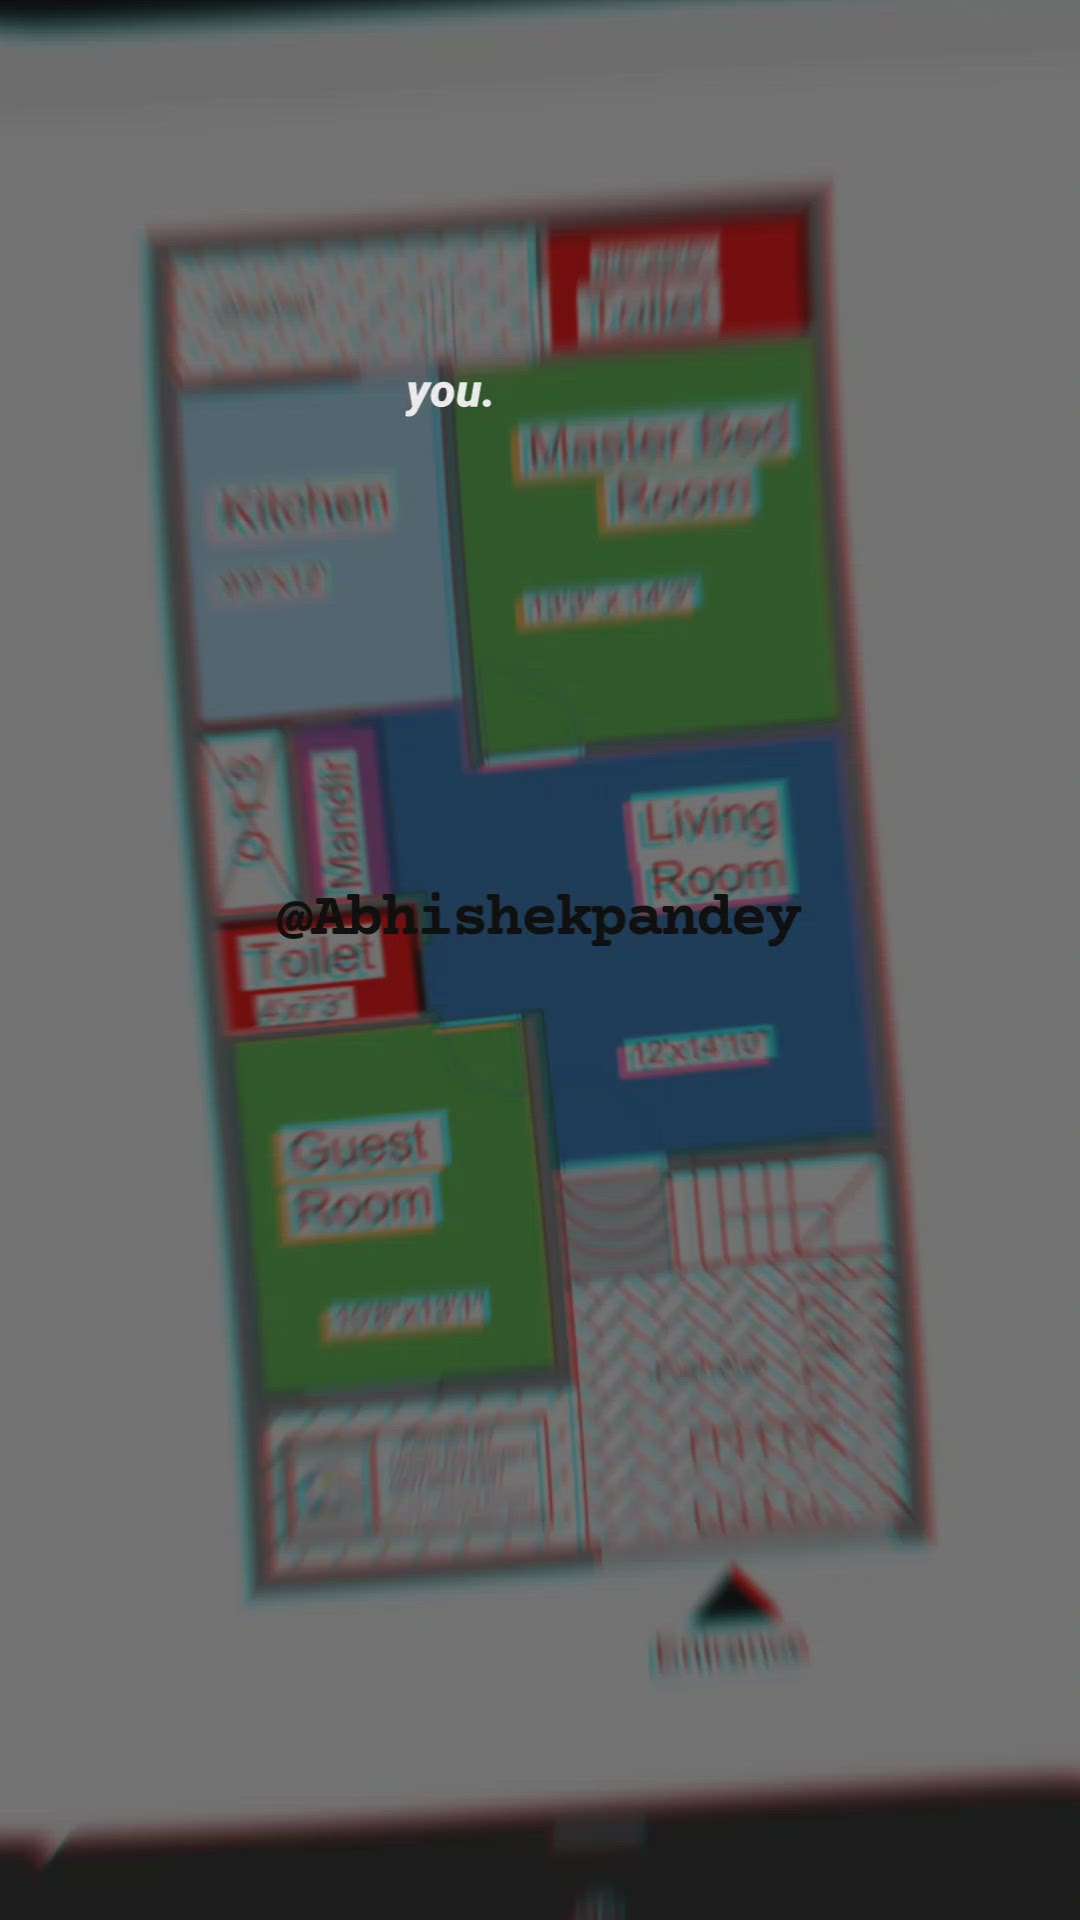 a new upcoming project at kokta bypass Bhopal.
#houseplanning #naksha #FloorPlans #CivilEngineer #StructureEngineer #Architectural_Drawings #1200sqft #25x50floorplan #25x50hhouseplan #bhopalproperty #bhopalconstruction #bhopalduplex #bhopal